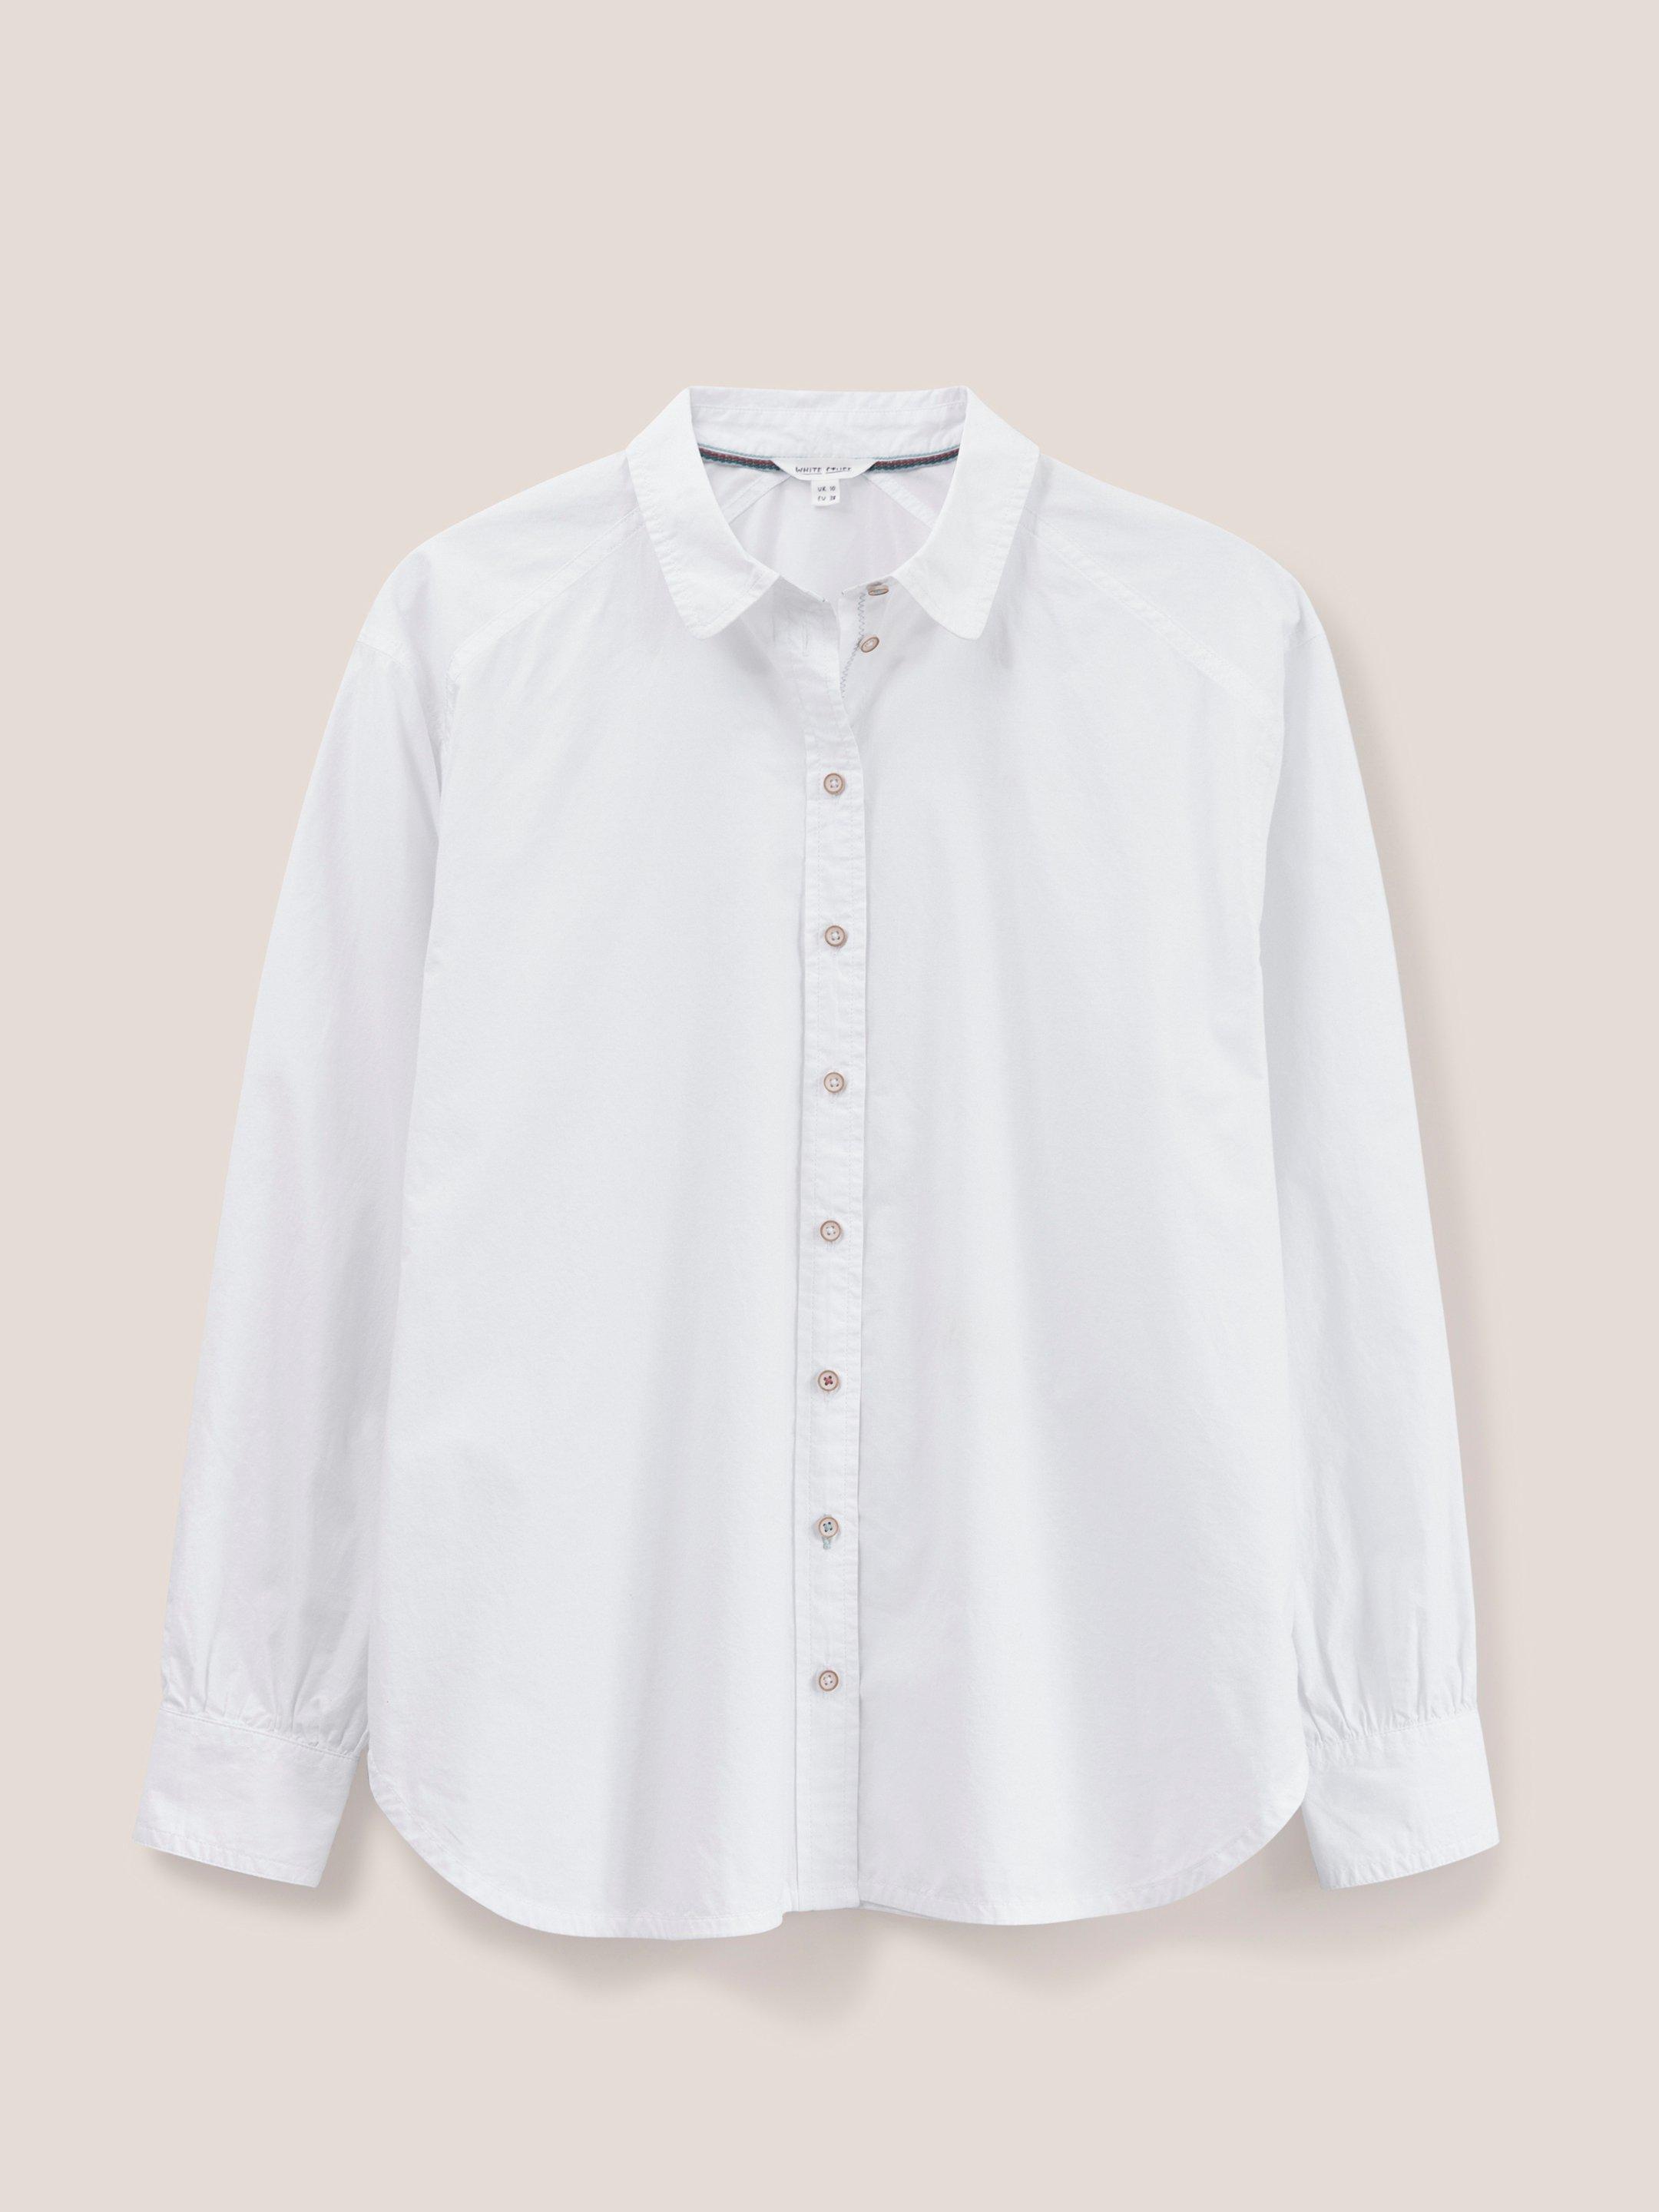 Freya Longline Shirt in NAT WHITE - FLAT FRONT